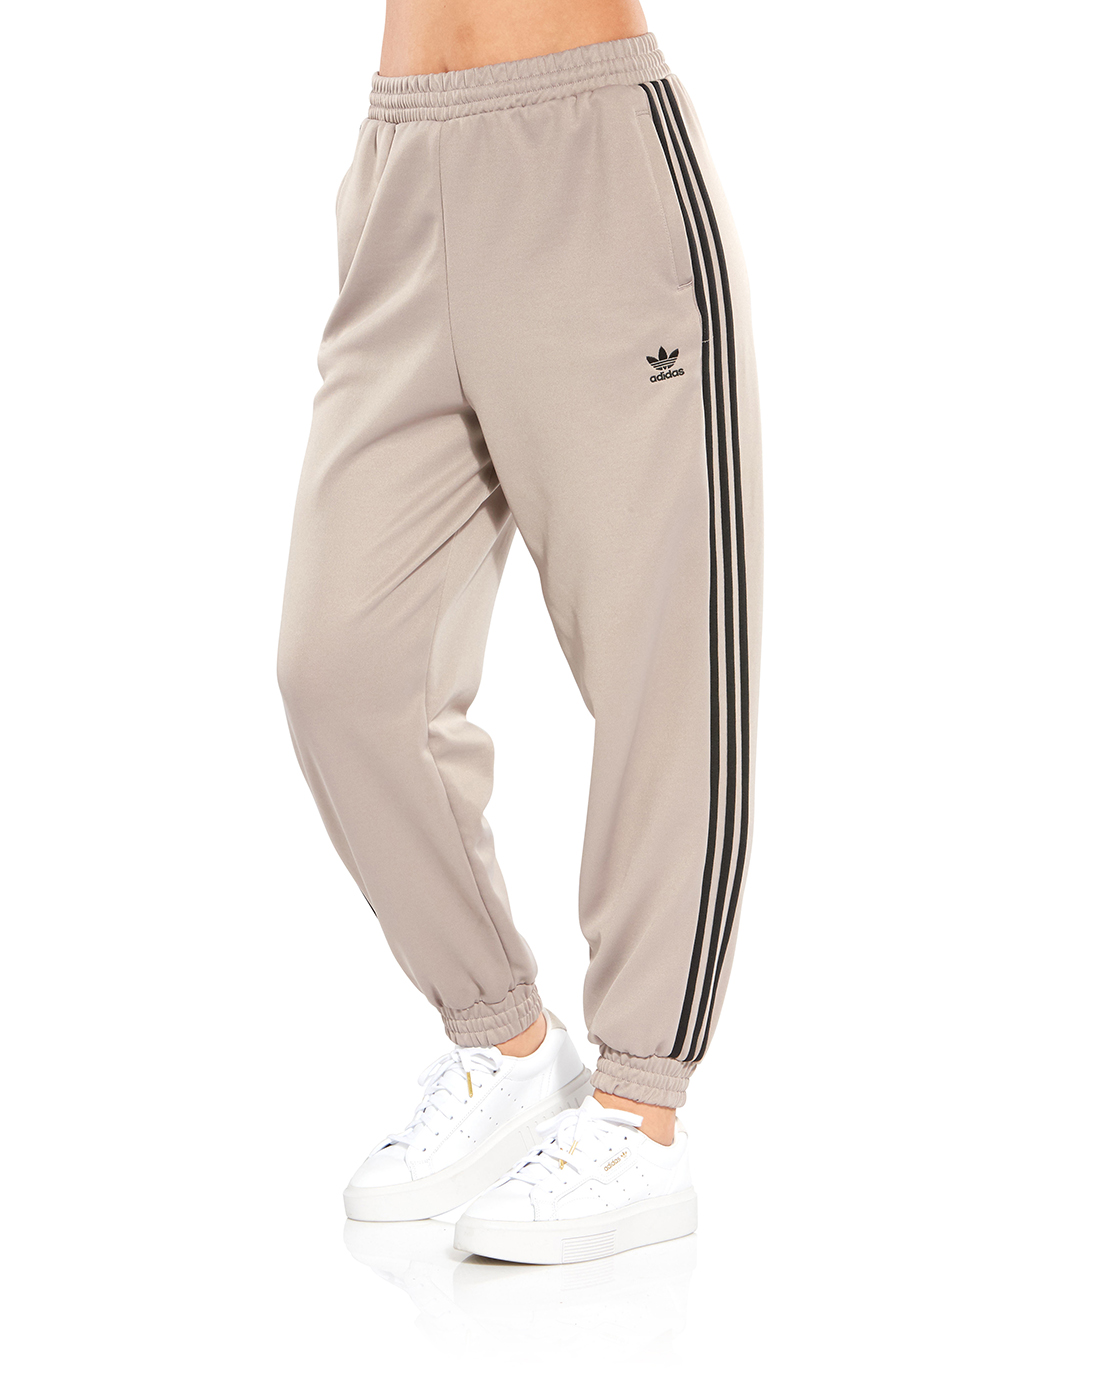 Corresponsal Jirafa eslogan adidas Originals Womens 3-stripes Track Pants - Brown | Life Style Sports EU